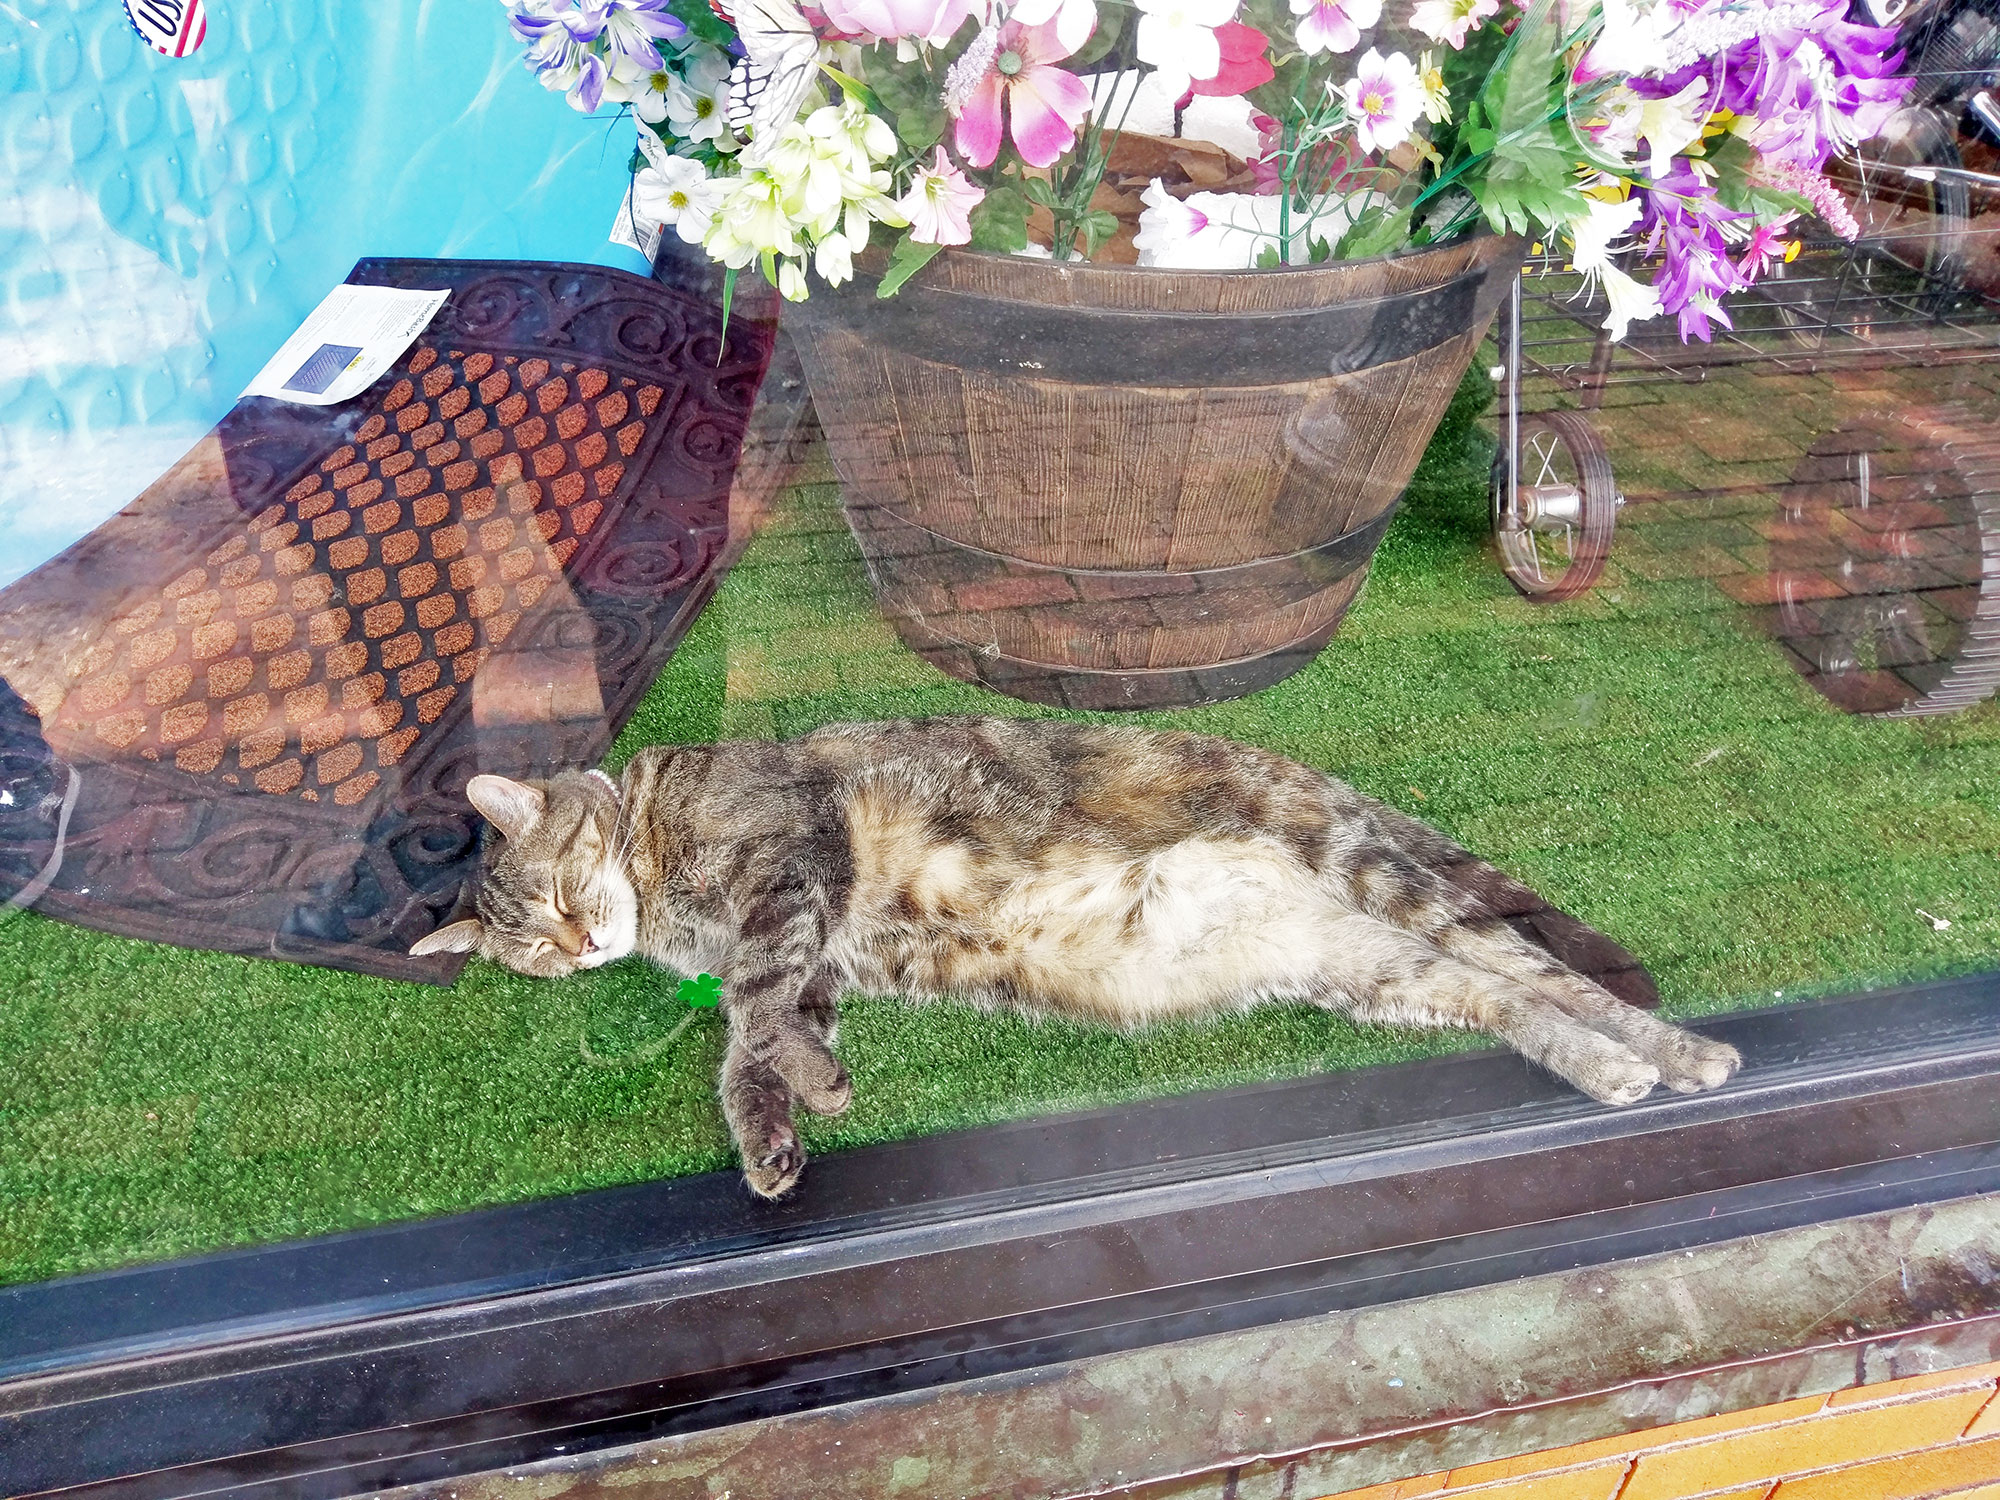 A sleeping cat in a boutique window in Nashville.